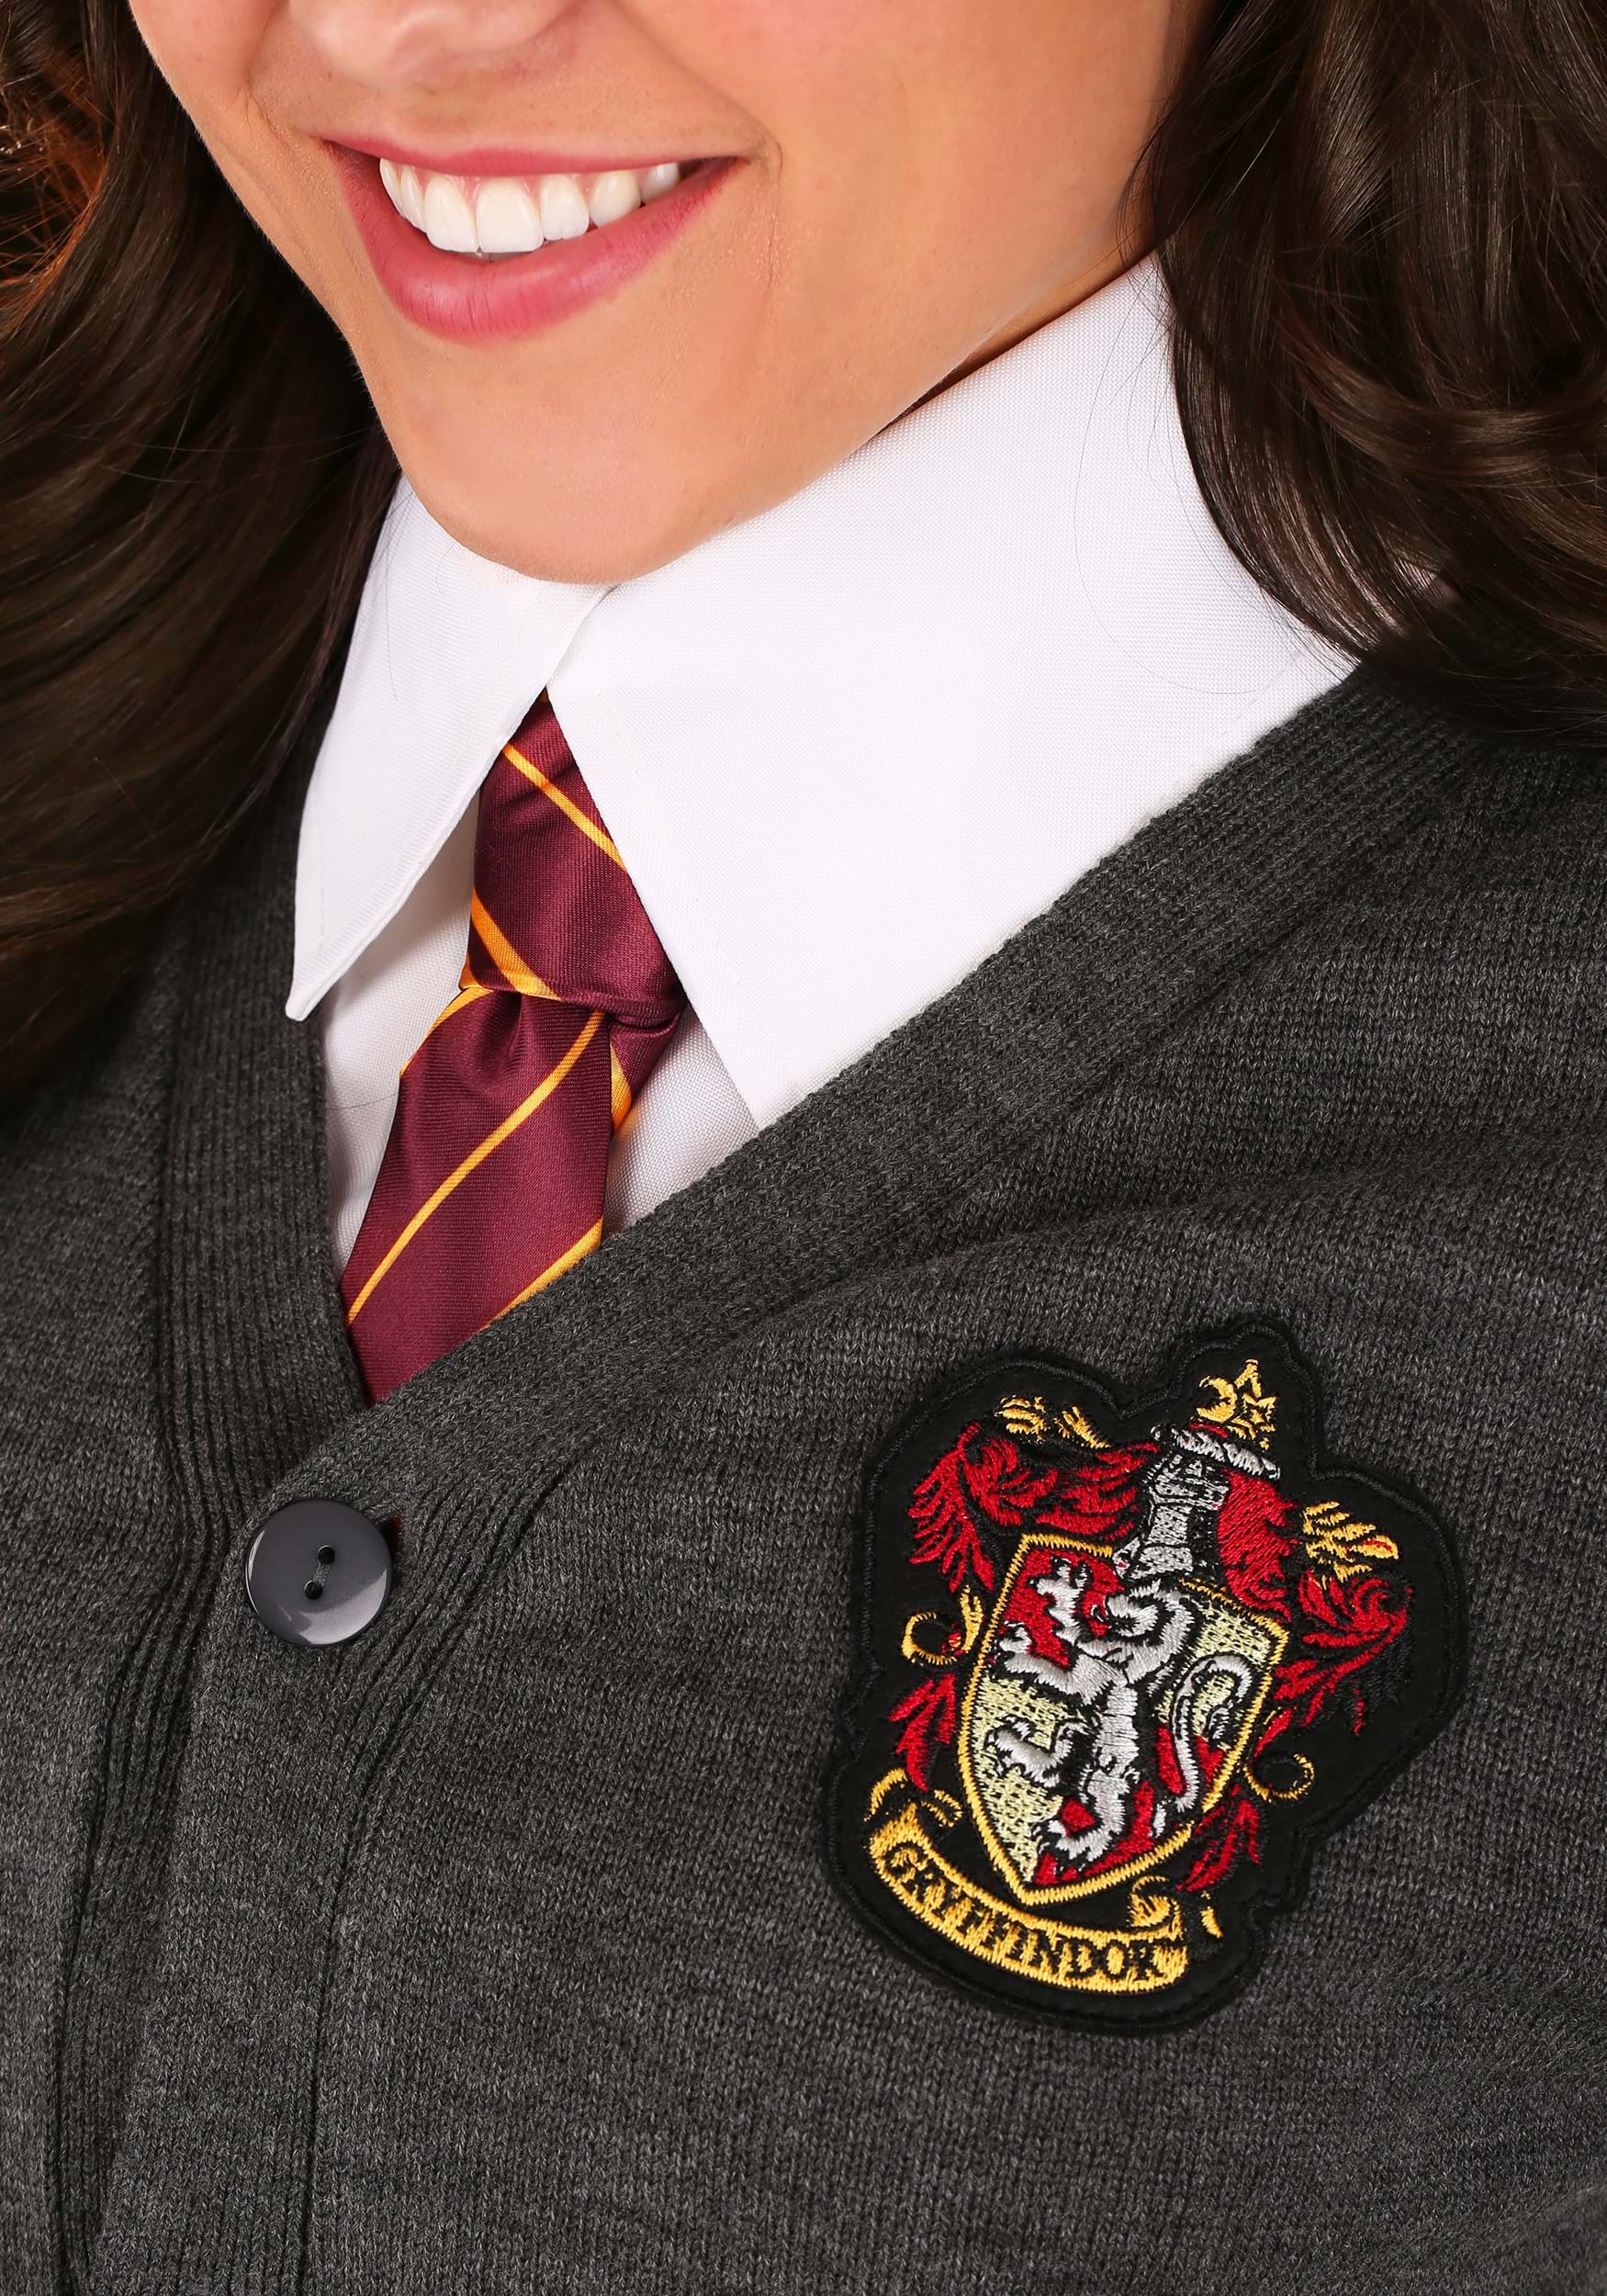 170 Harry Potter - Hermione Granger Costume ideas